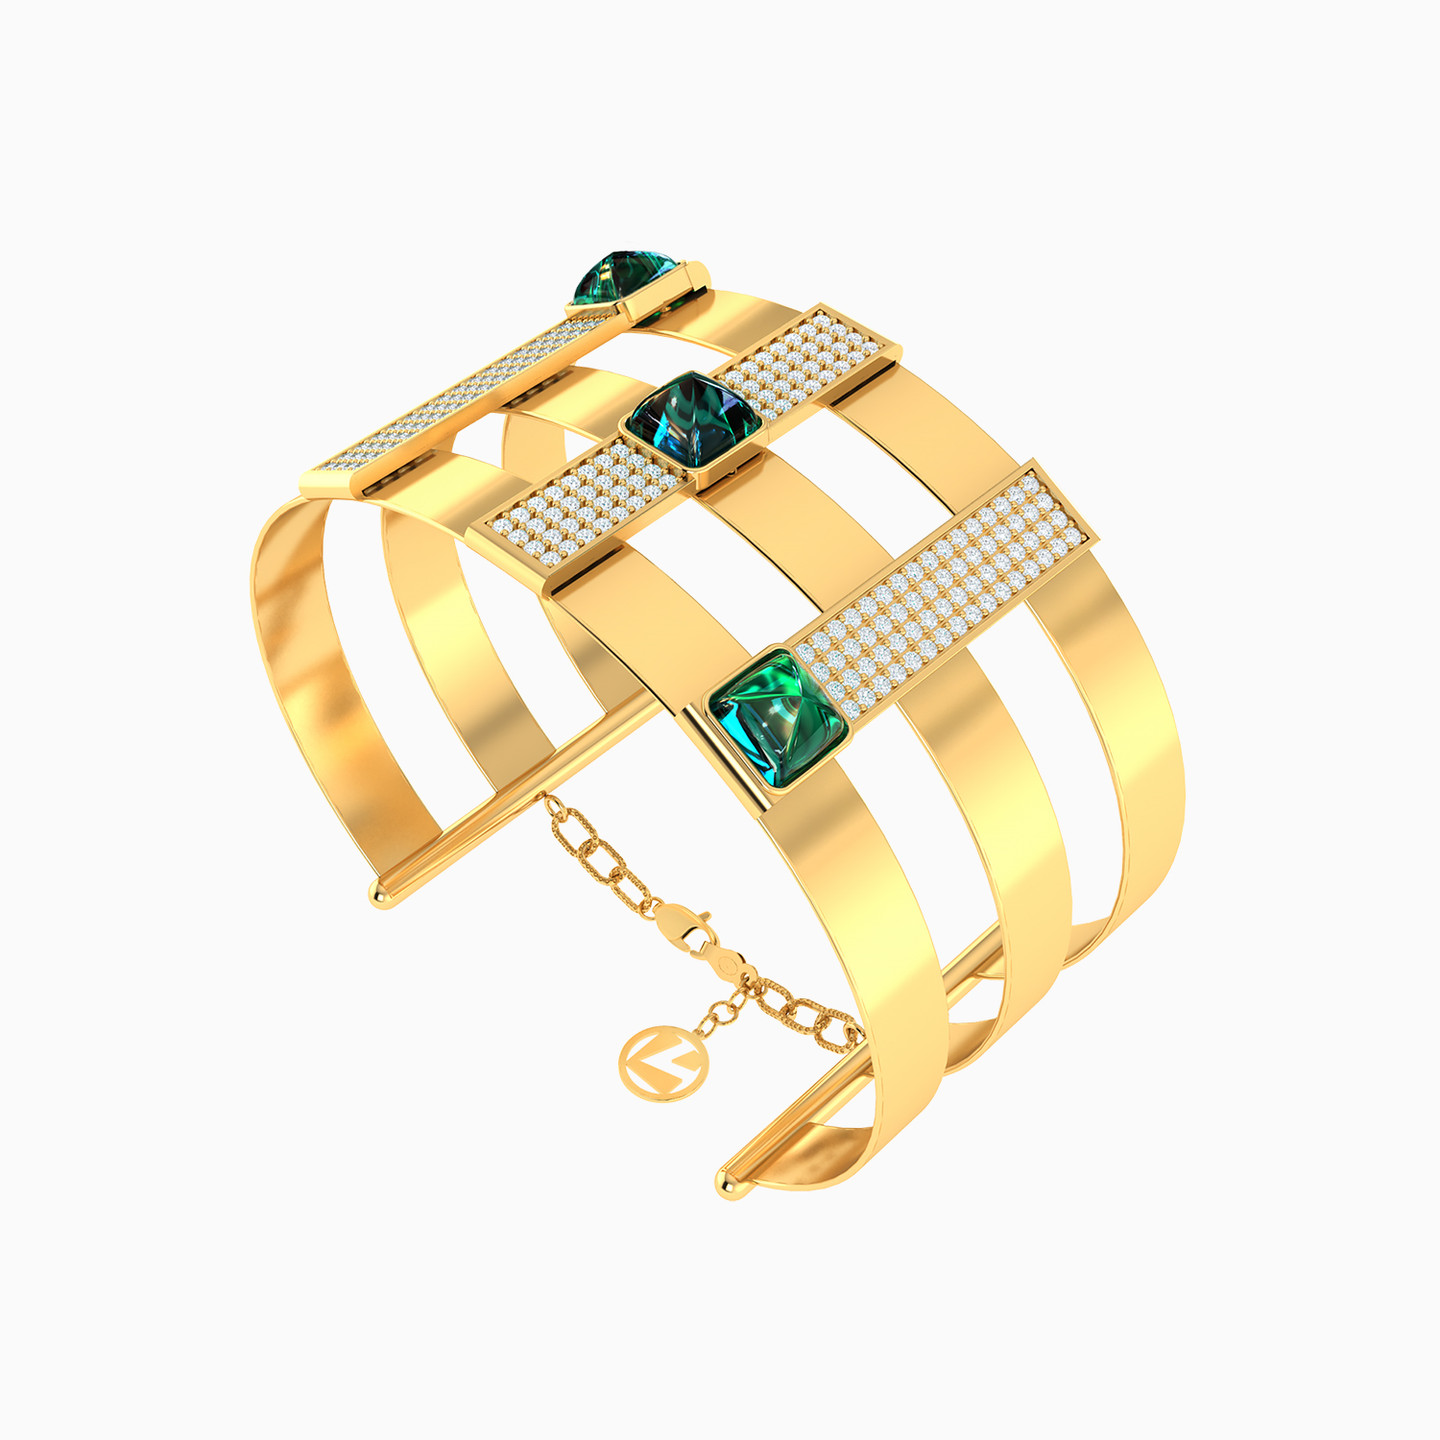 18K Gold Colored Stones Cuff Bracelet - 3